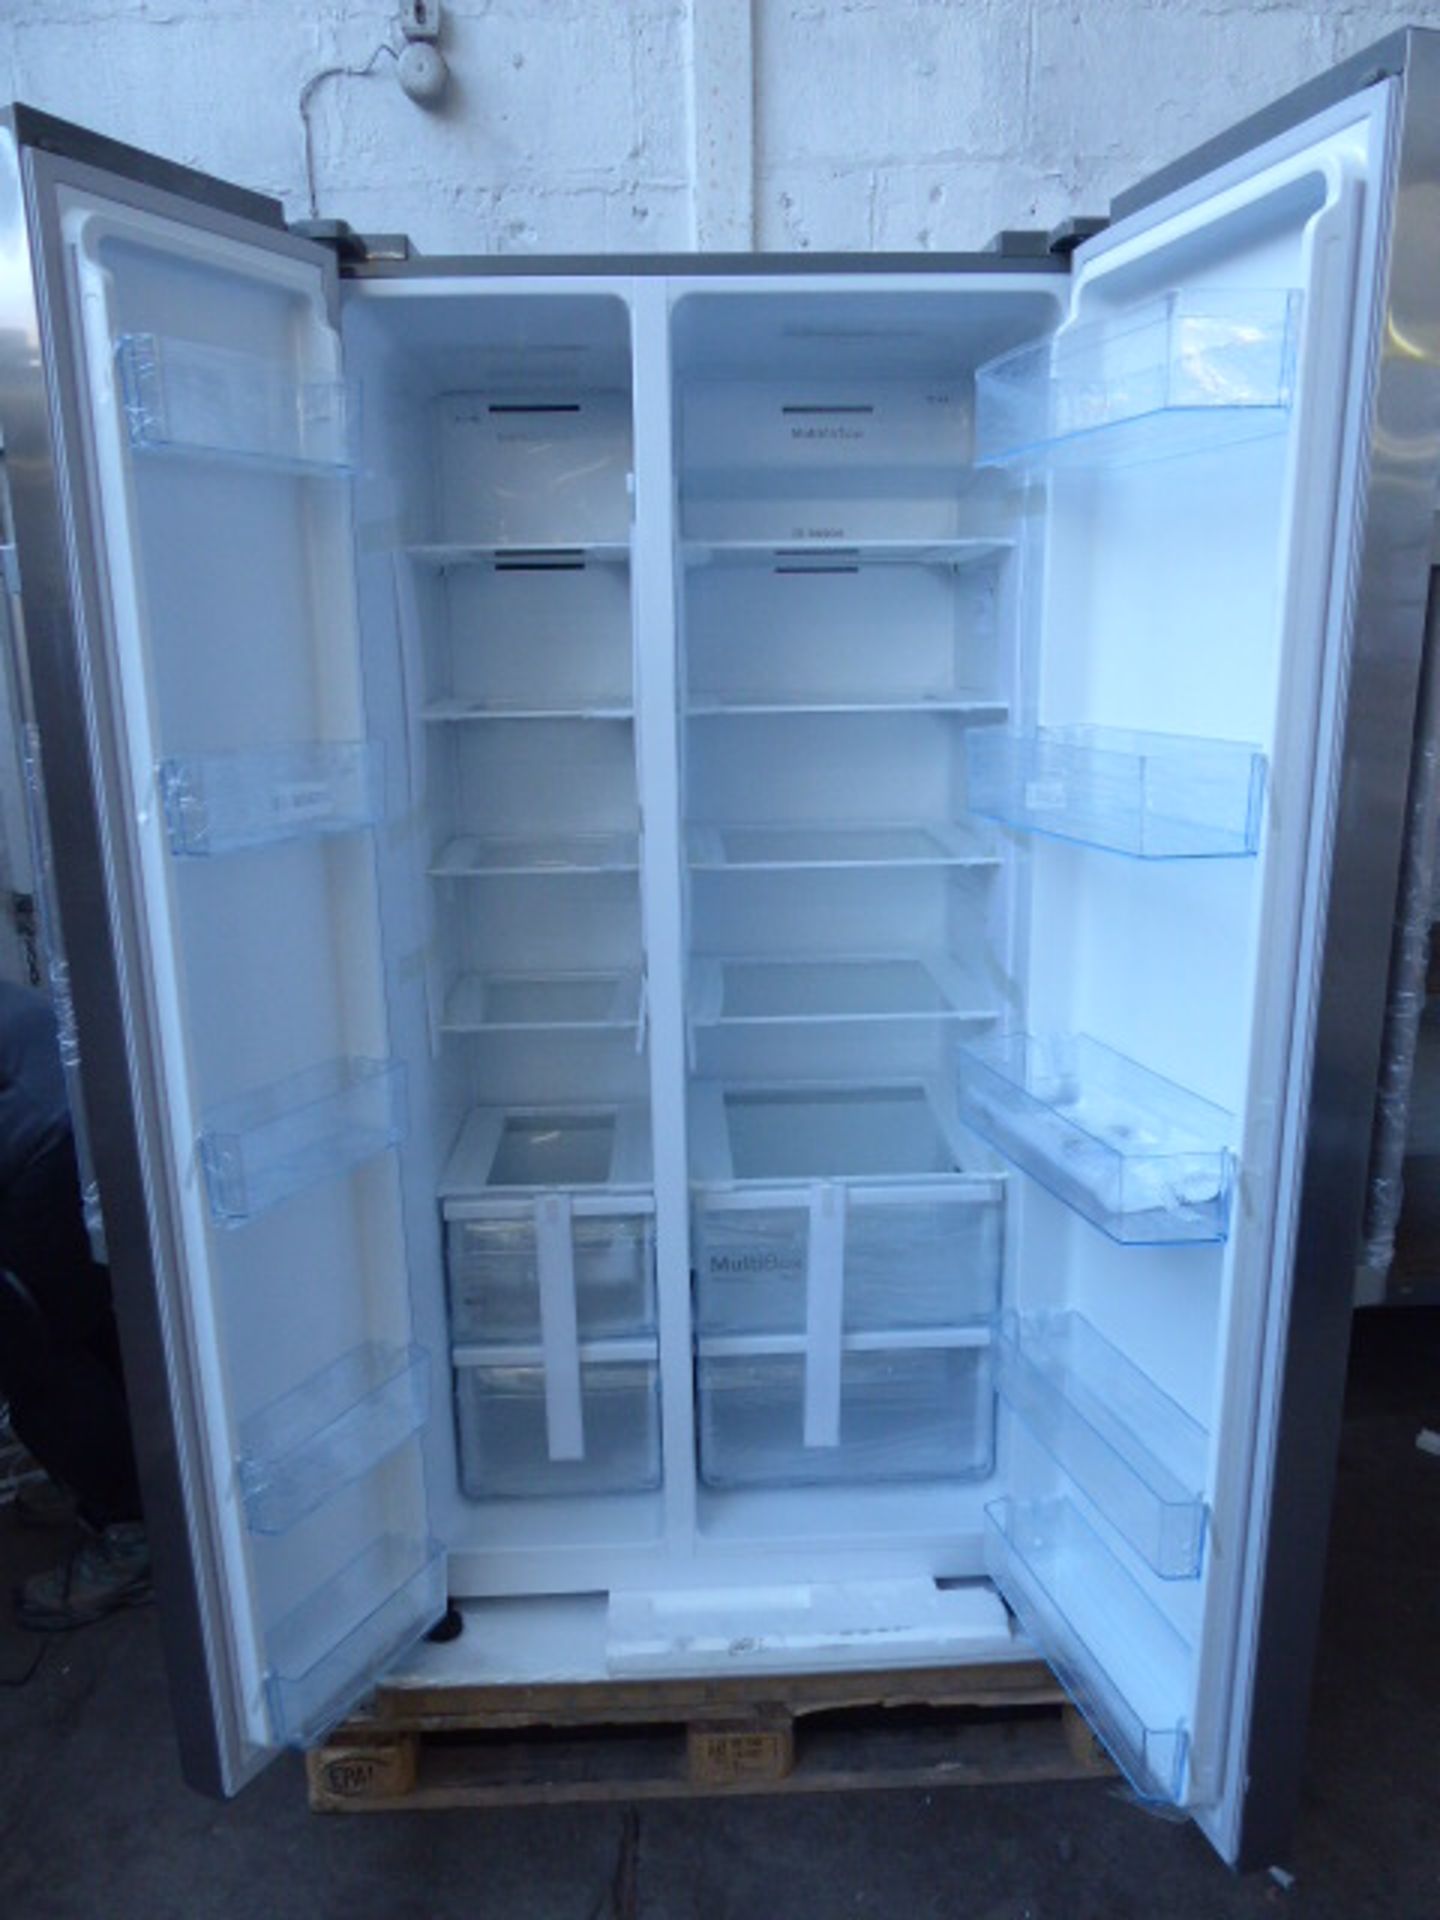 KAN93VIFPGB Bosch Side-by-side fridge-freezer - Image 2 of 2